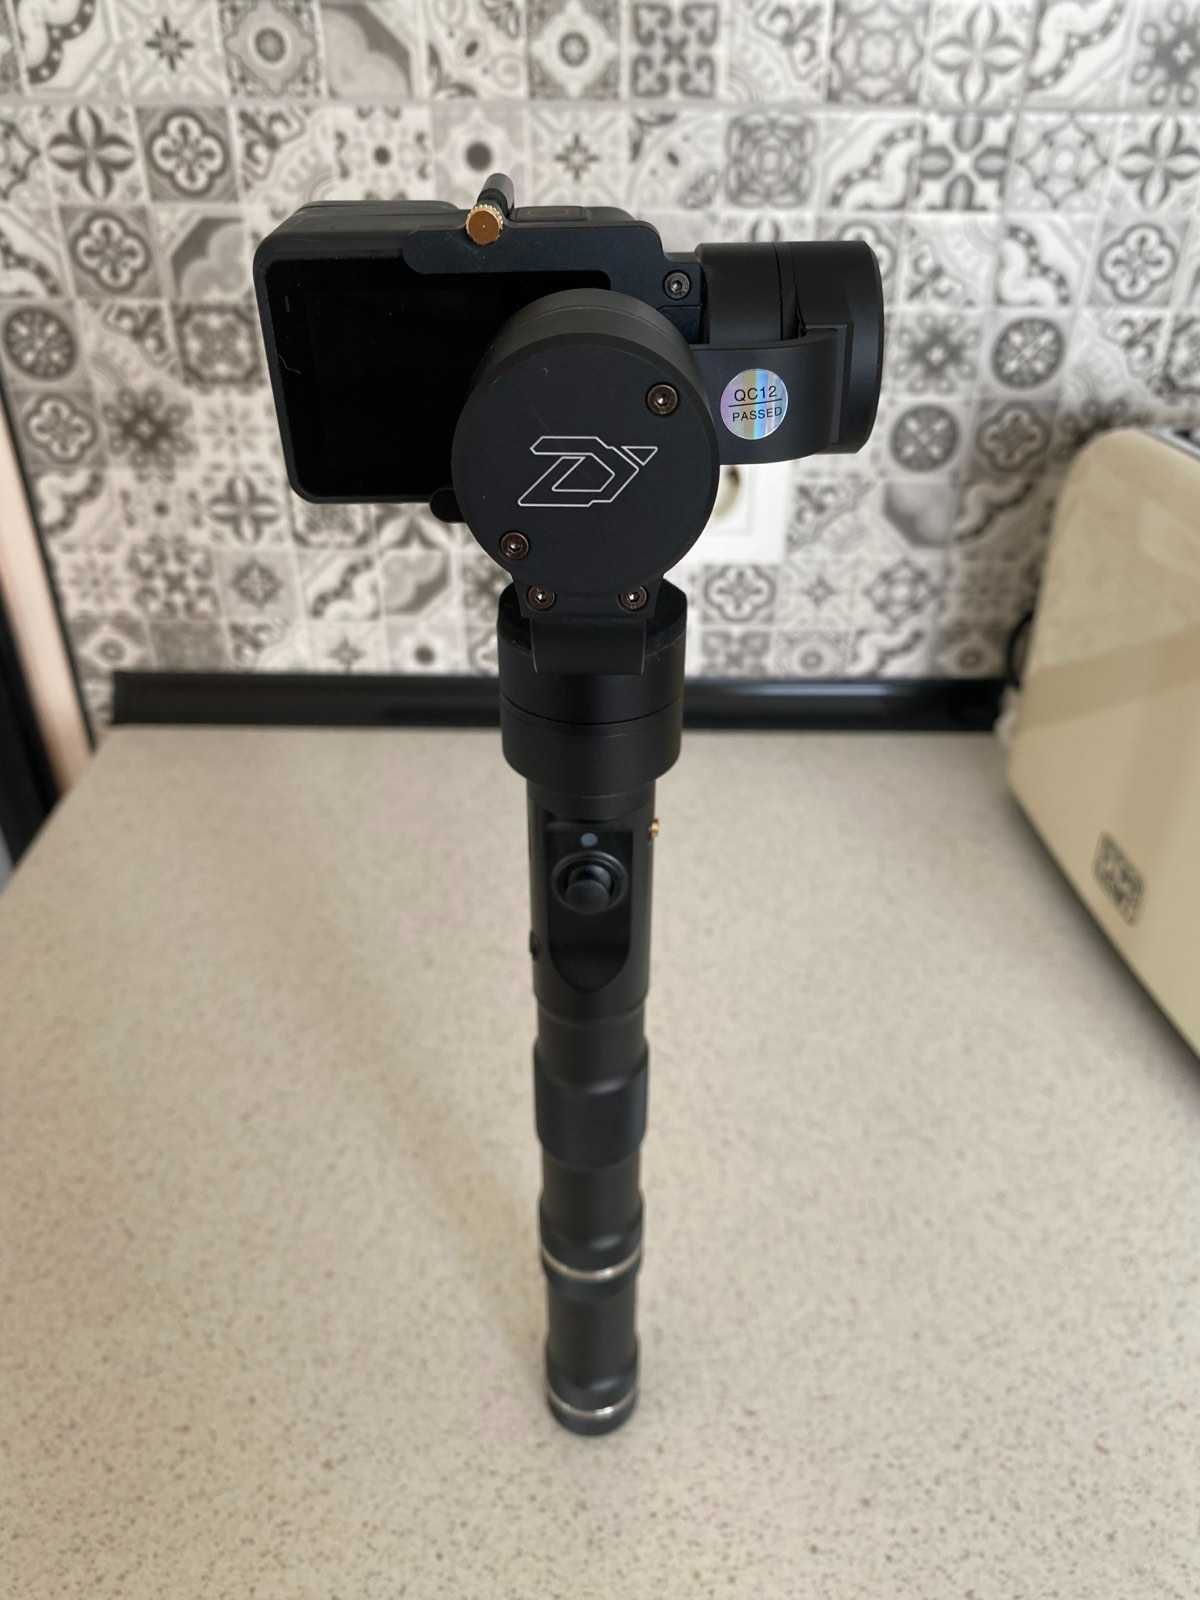 GoPro Hero 7 Black със Zhiyun Evolution Evo Z1 gimbal